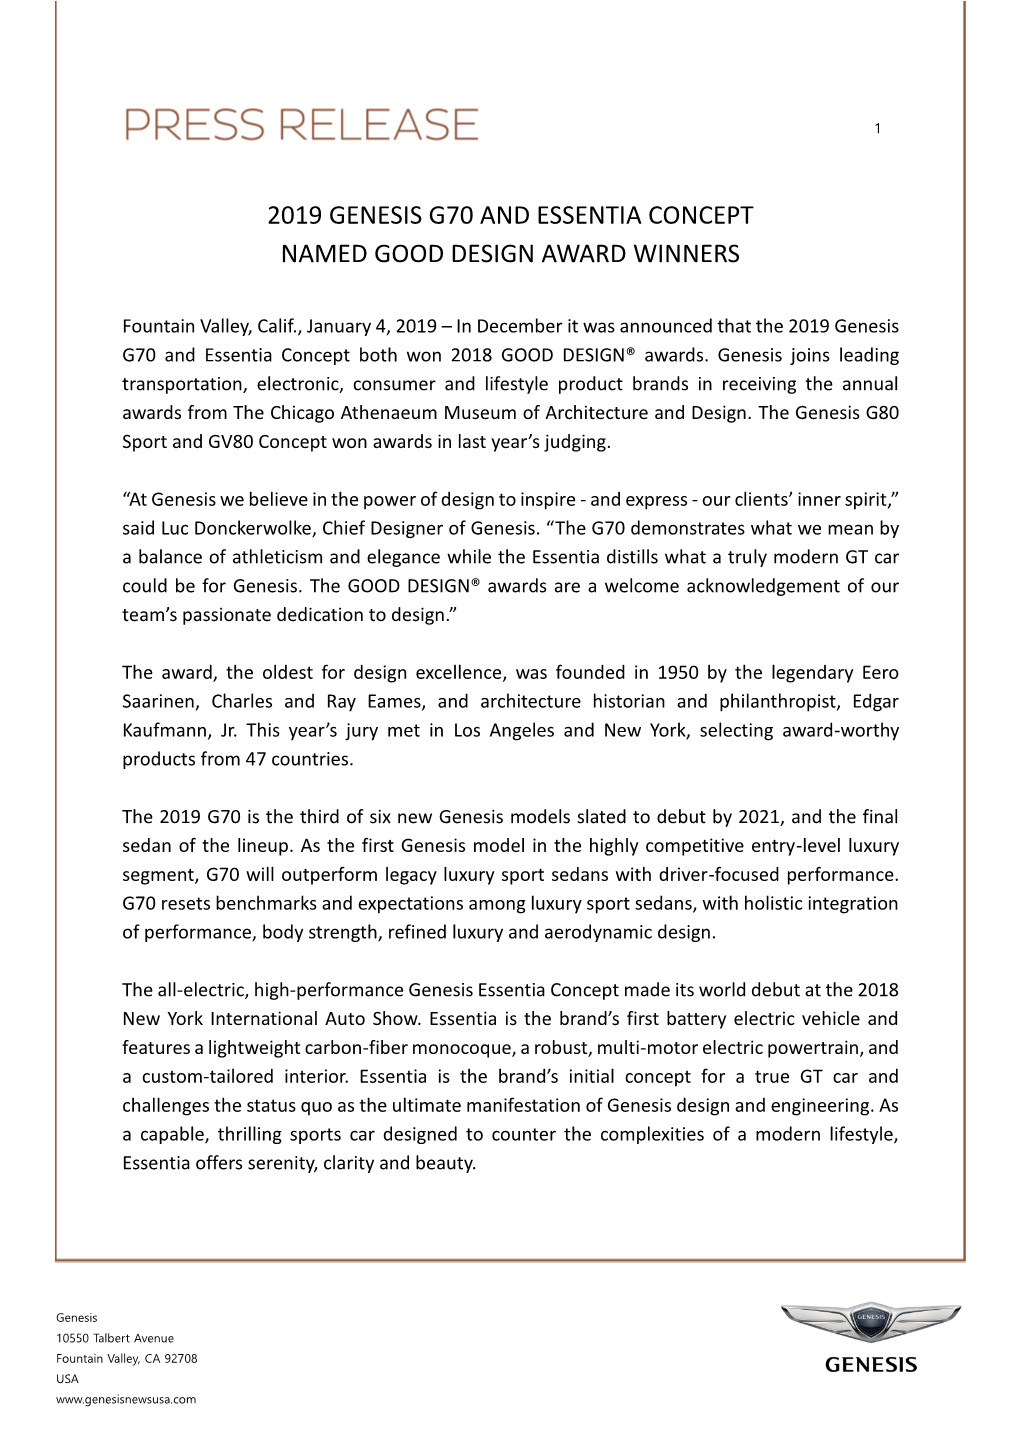 2019 Genesis G70 and Essentia Concept Named Good Design Award Winners